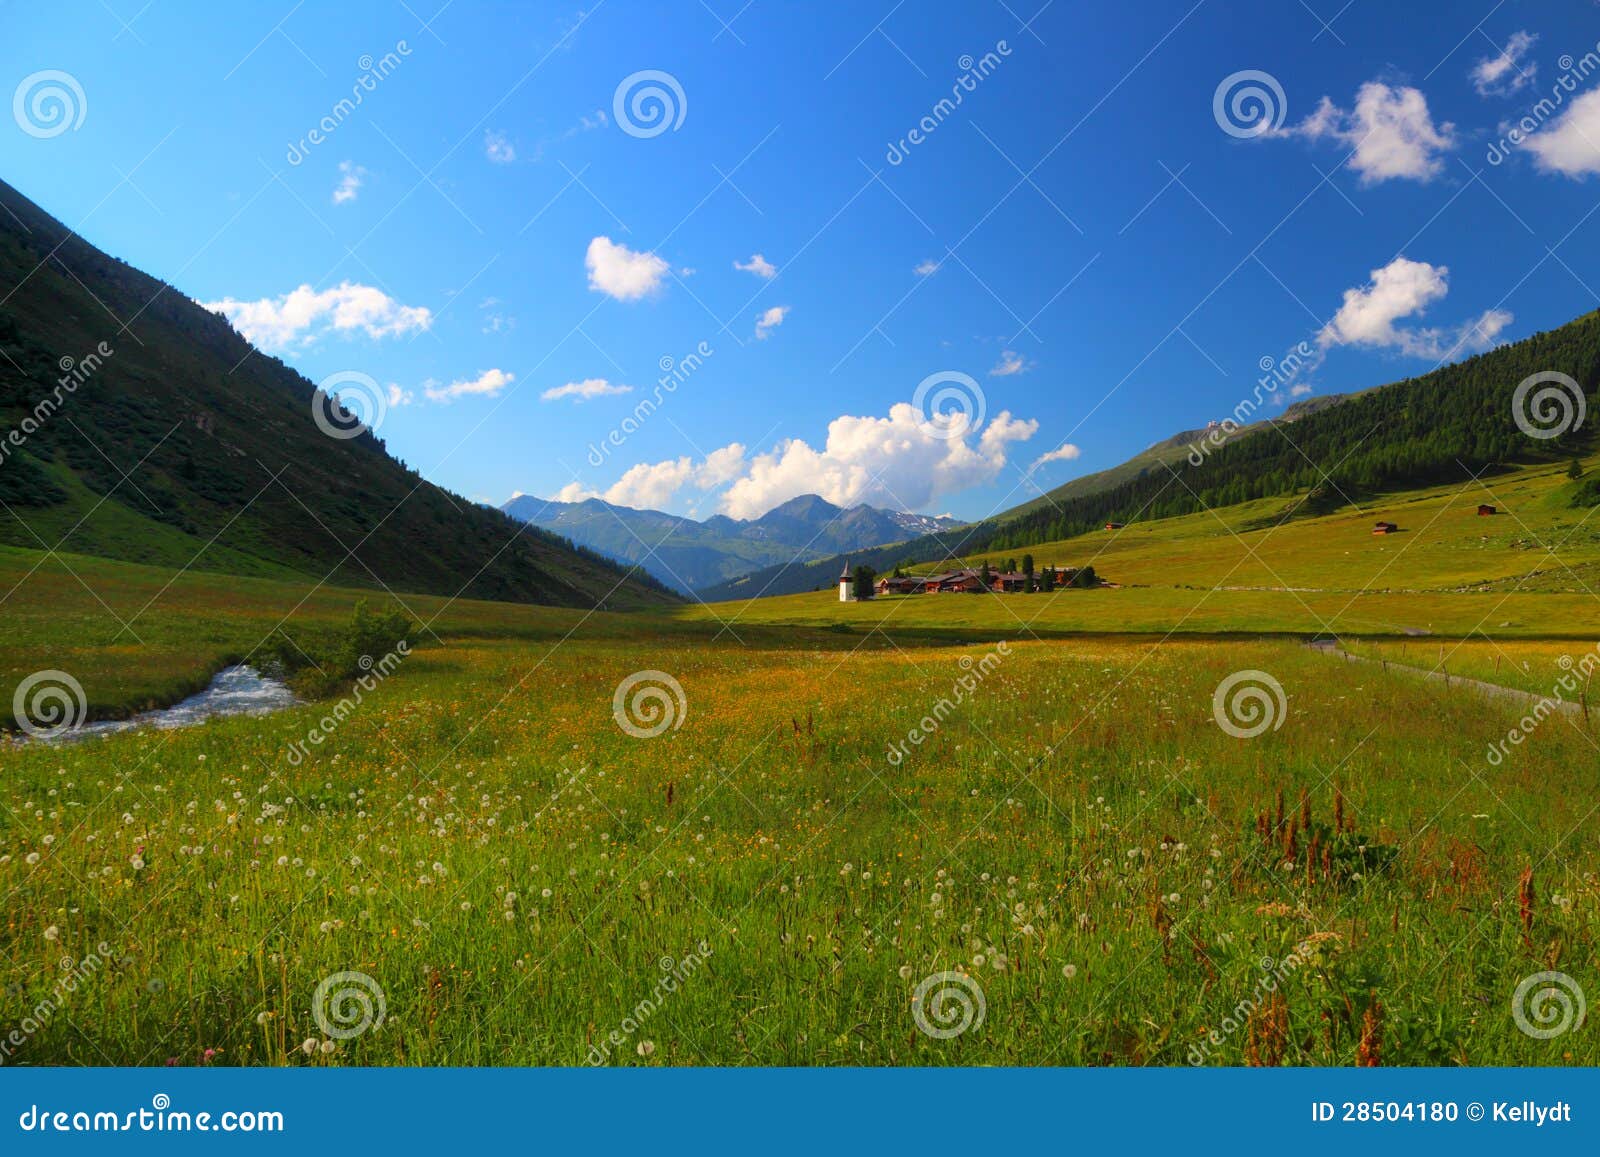 mountain landscape with municipality of sertig dorfli